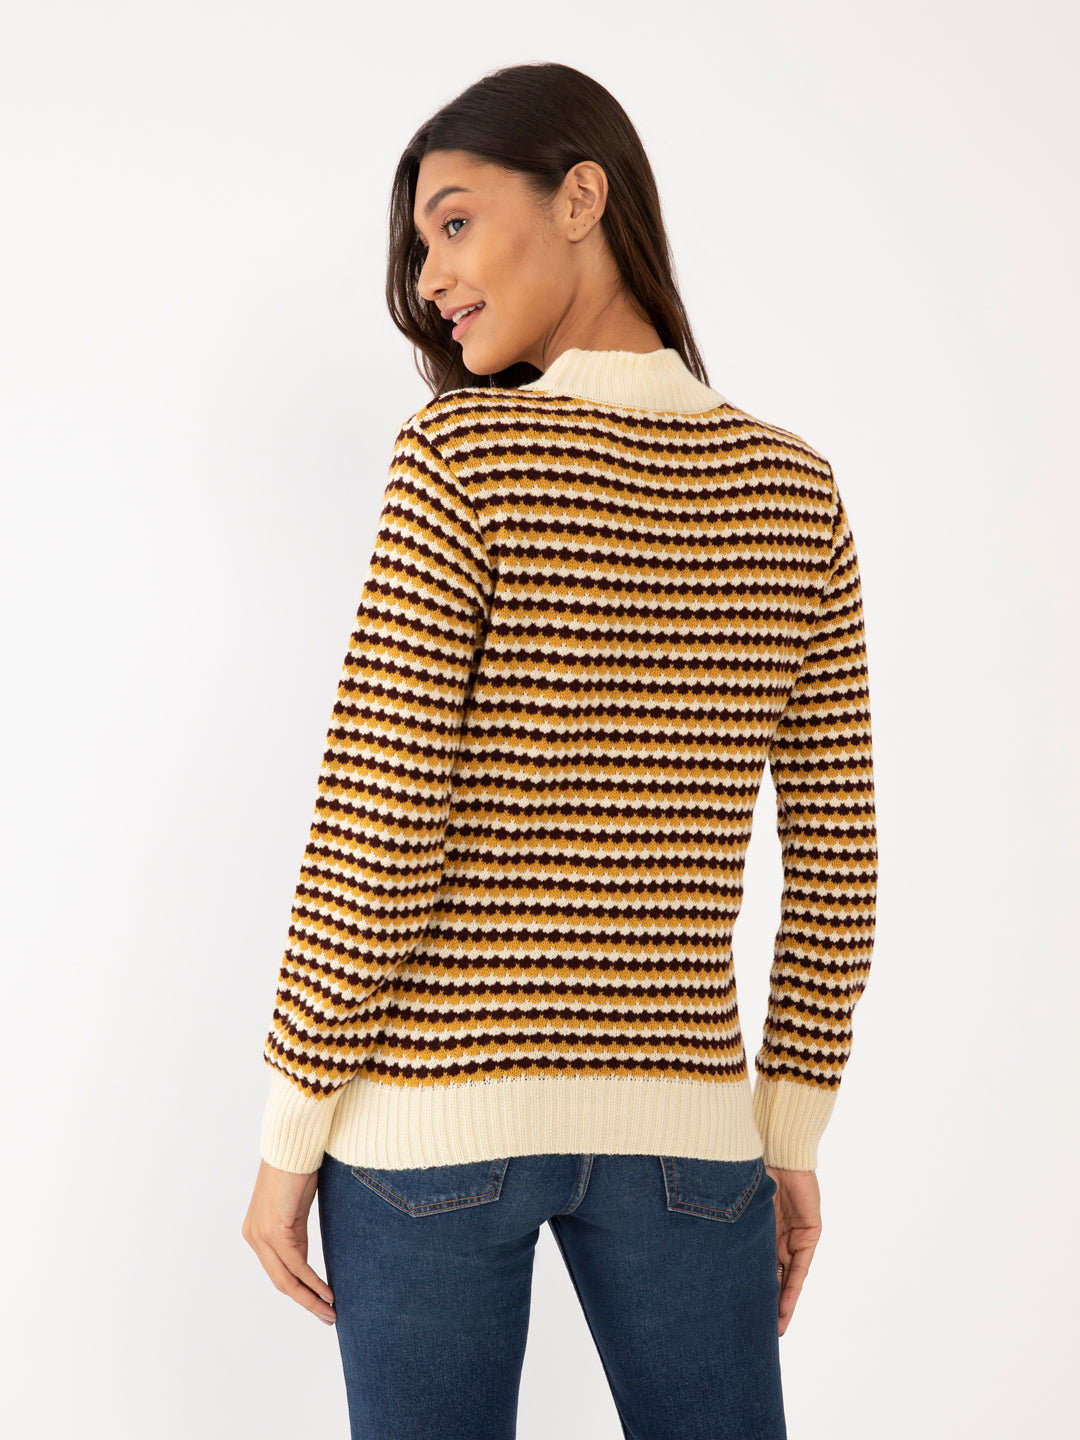 Multicolored Jacquard Sweater For Women